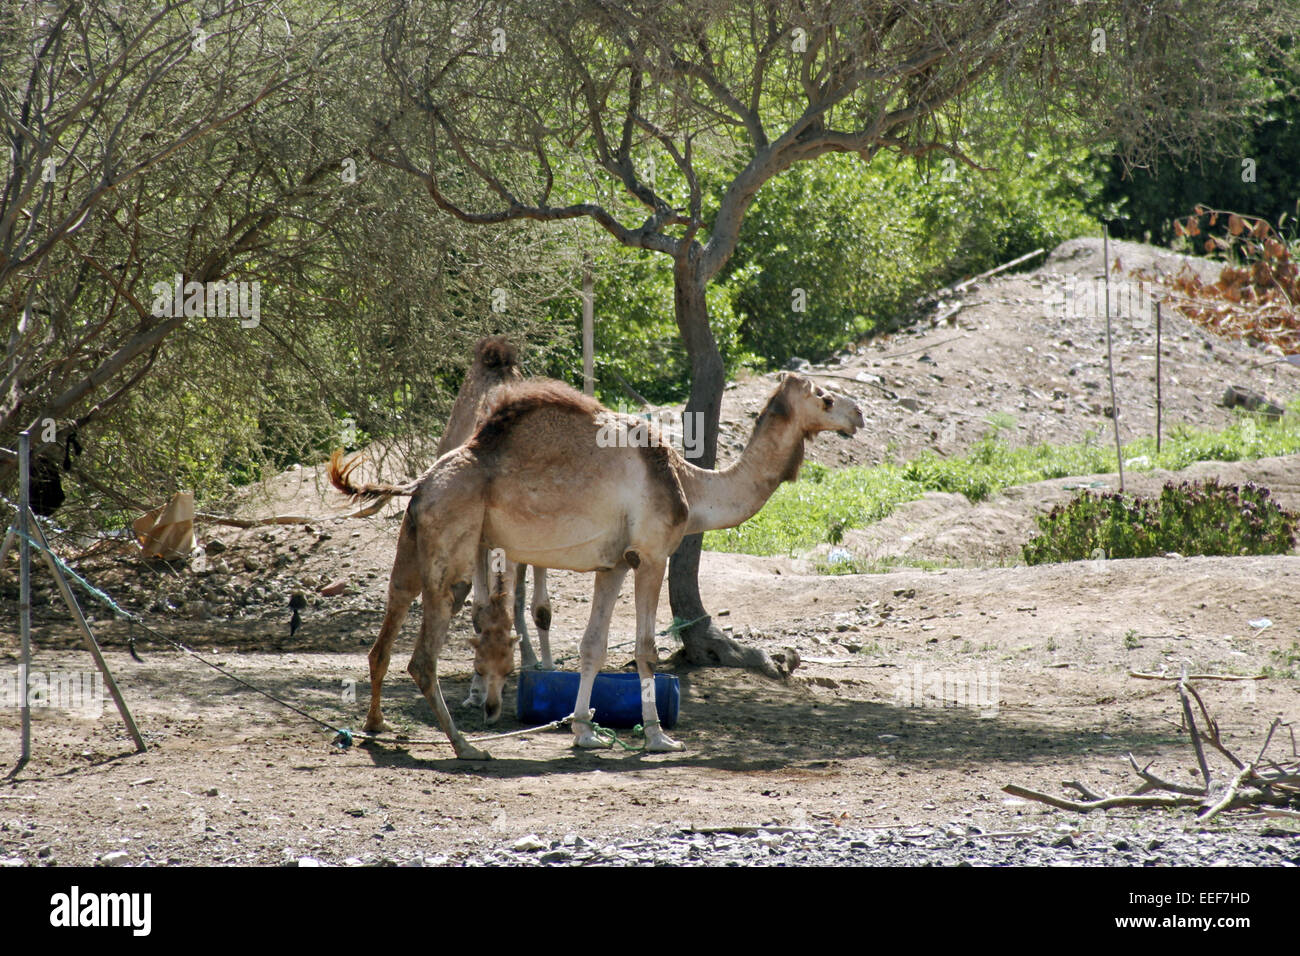 Sultanat Oman Reisen Einhoeckeriges Kamel Kamele Camel Arabische Halbinsel Naher Osten Sultanat Ausflugsziel Kultur Sehenswuerdi Foto Stock